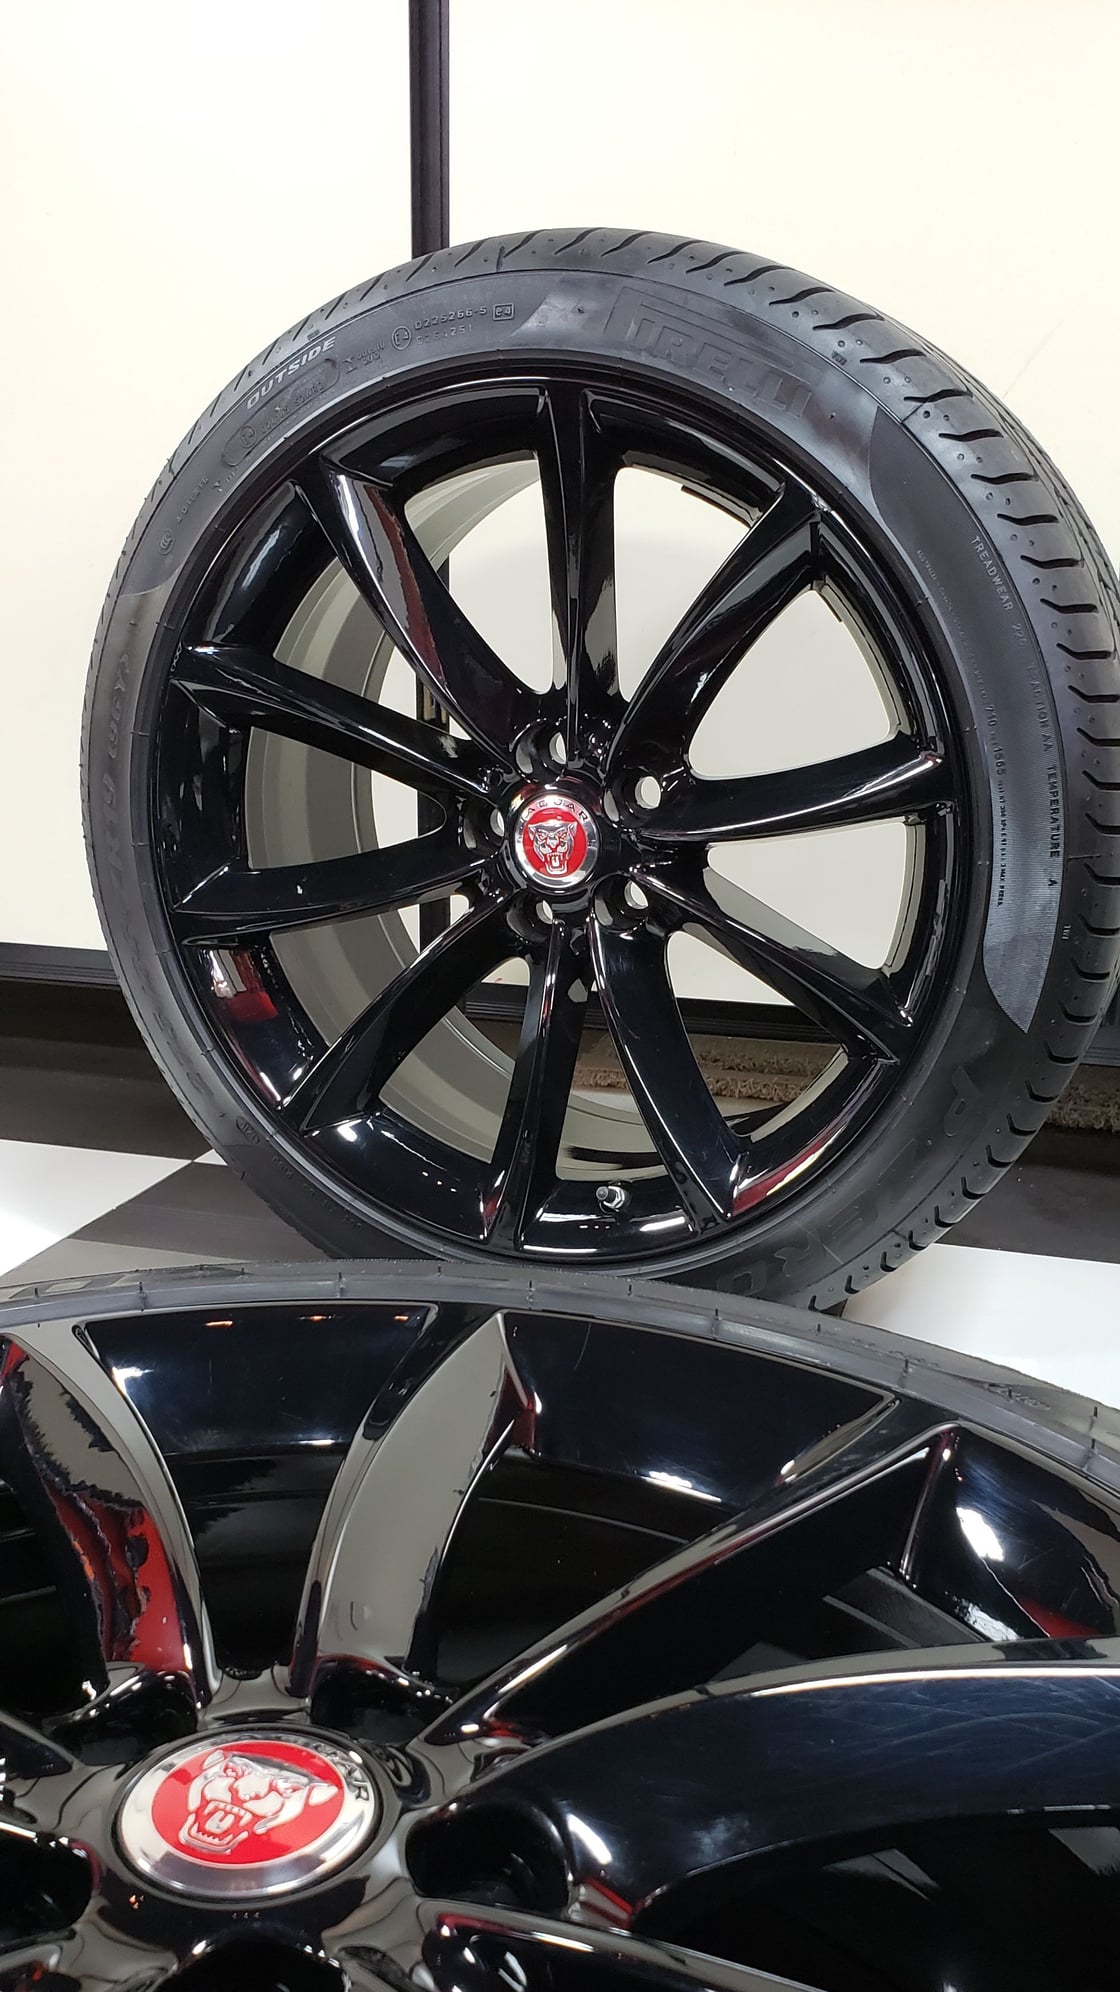 Wheels and Tires/Axles - 19" Factory OEM Jaguar FTYPE WHEELS RIMS AND NEW TIRES - New - 2014 to 2019 Jaguar F-Type - Sacramento, CA 95763, United States